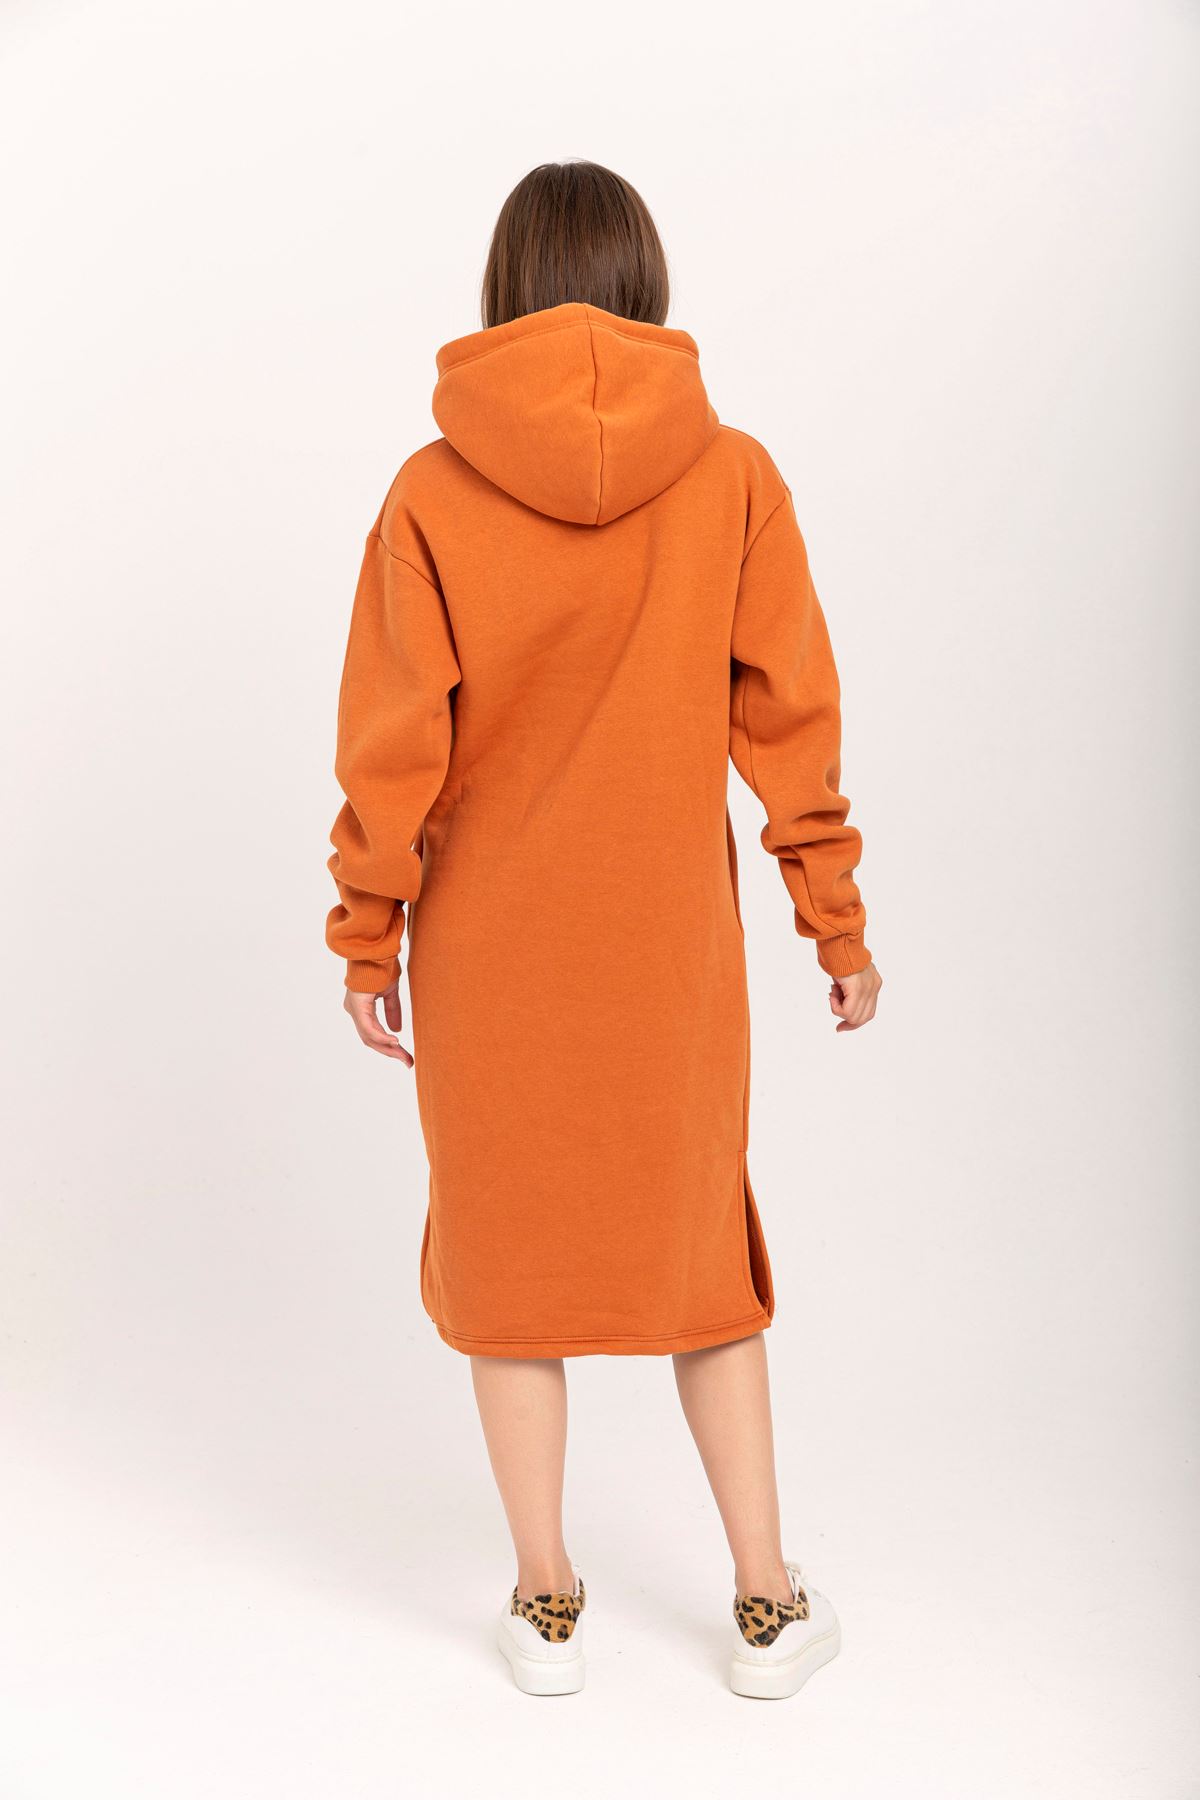 Third Knit With Wool İnside Fabric Long Sleeve Hooded Oversize Women Dress - Cinnamon 